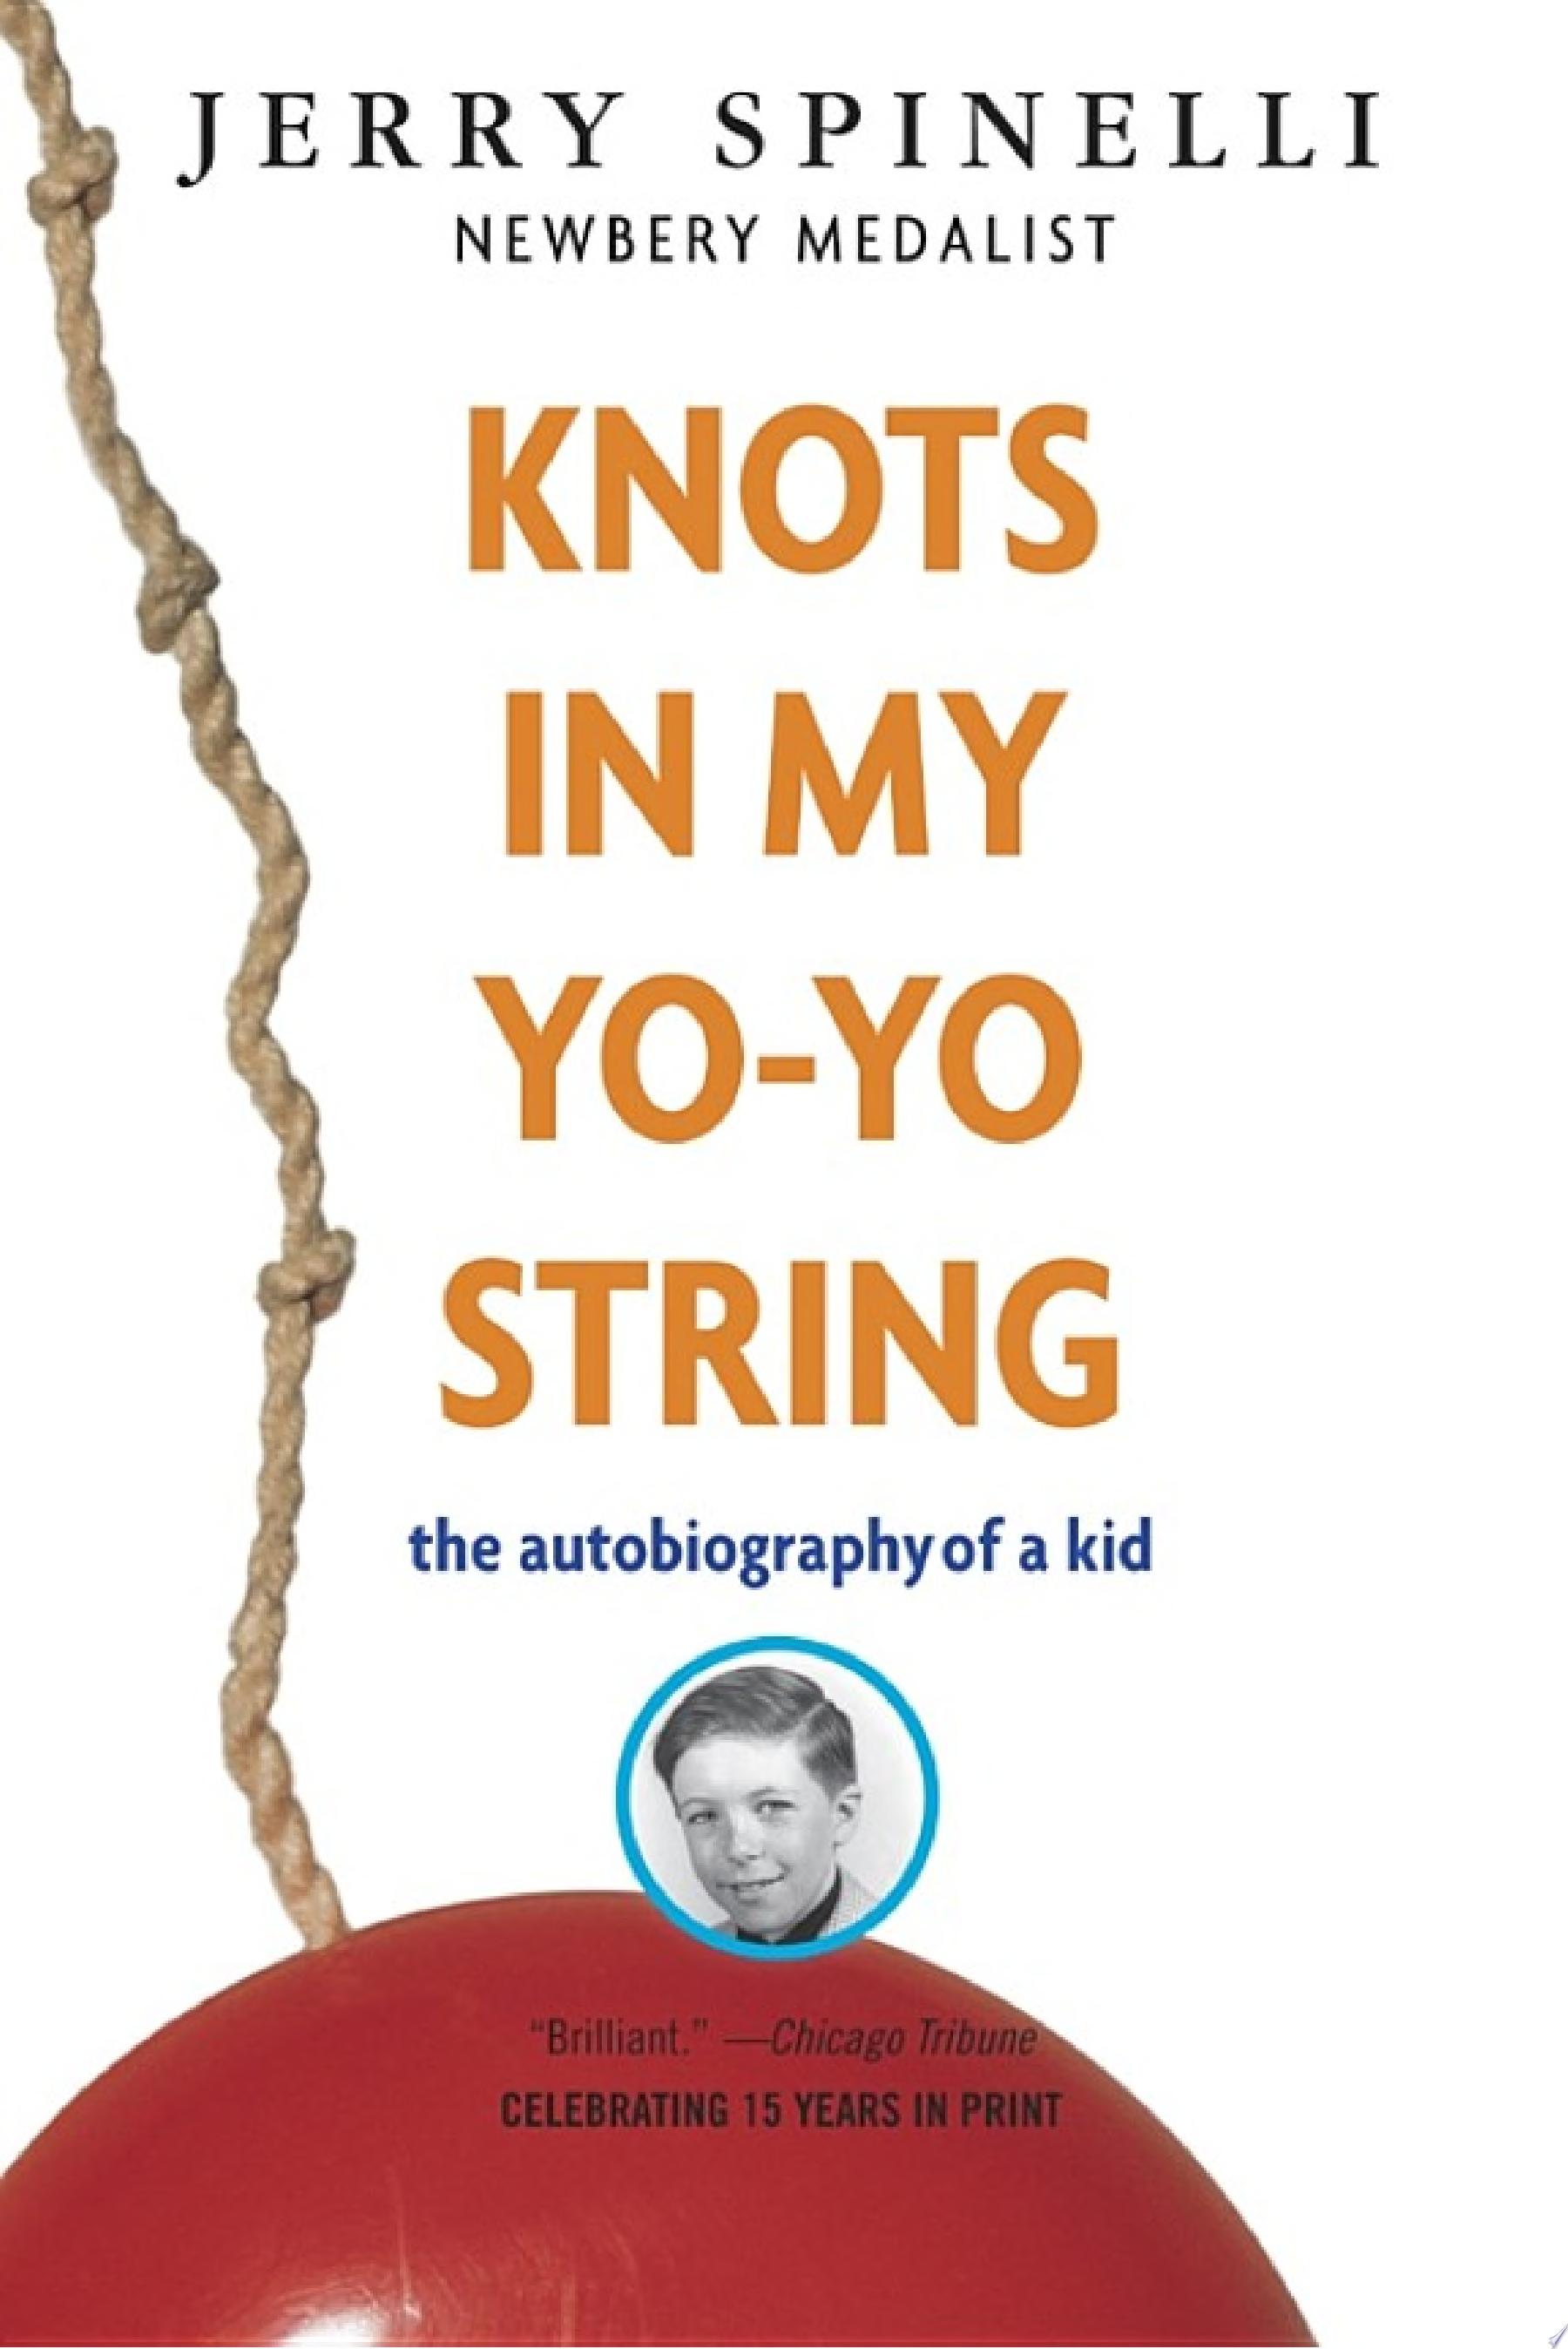 Image for "Knots in My Yo-Yo String"